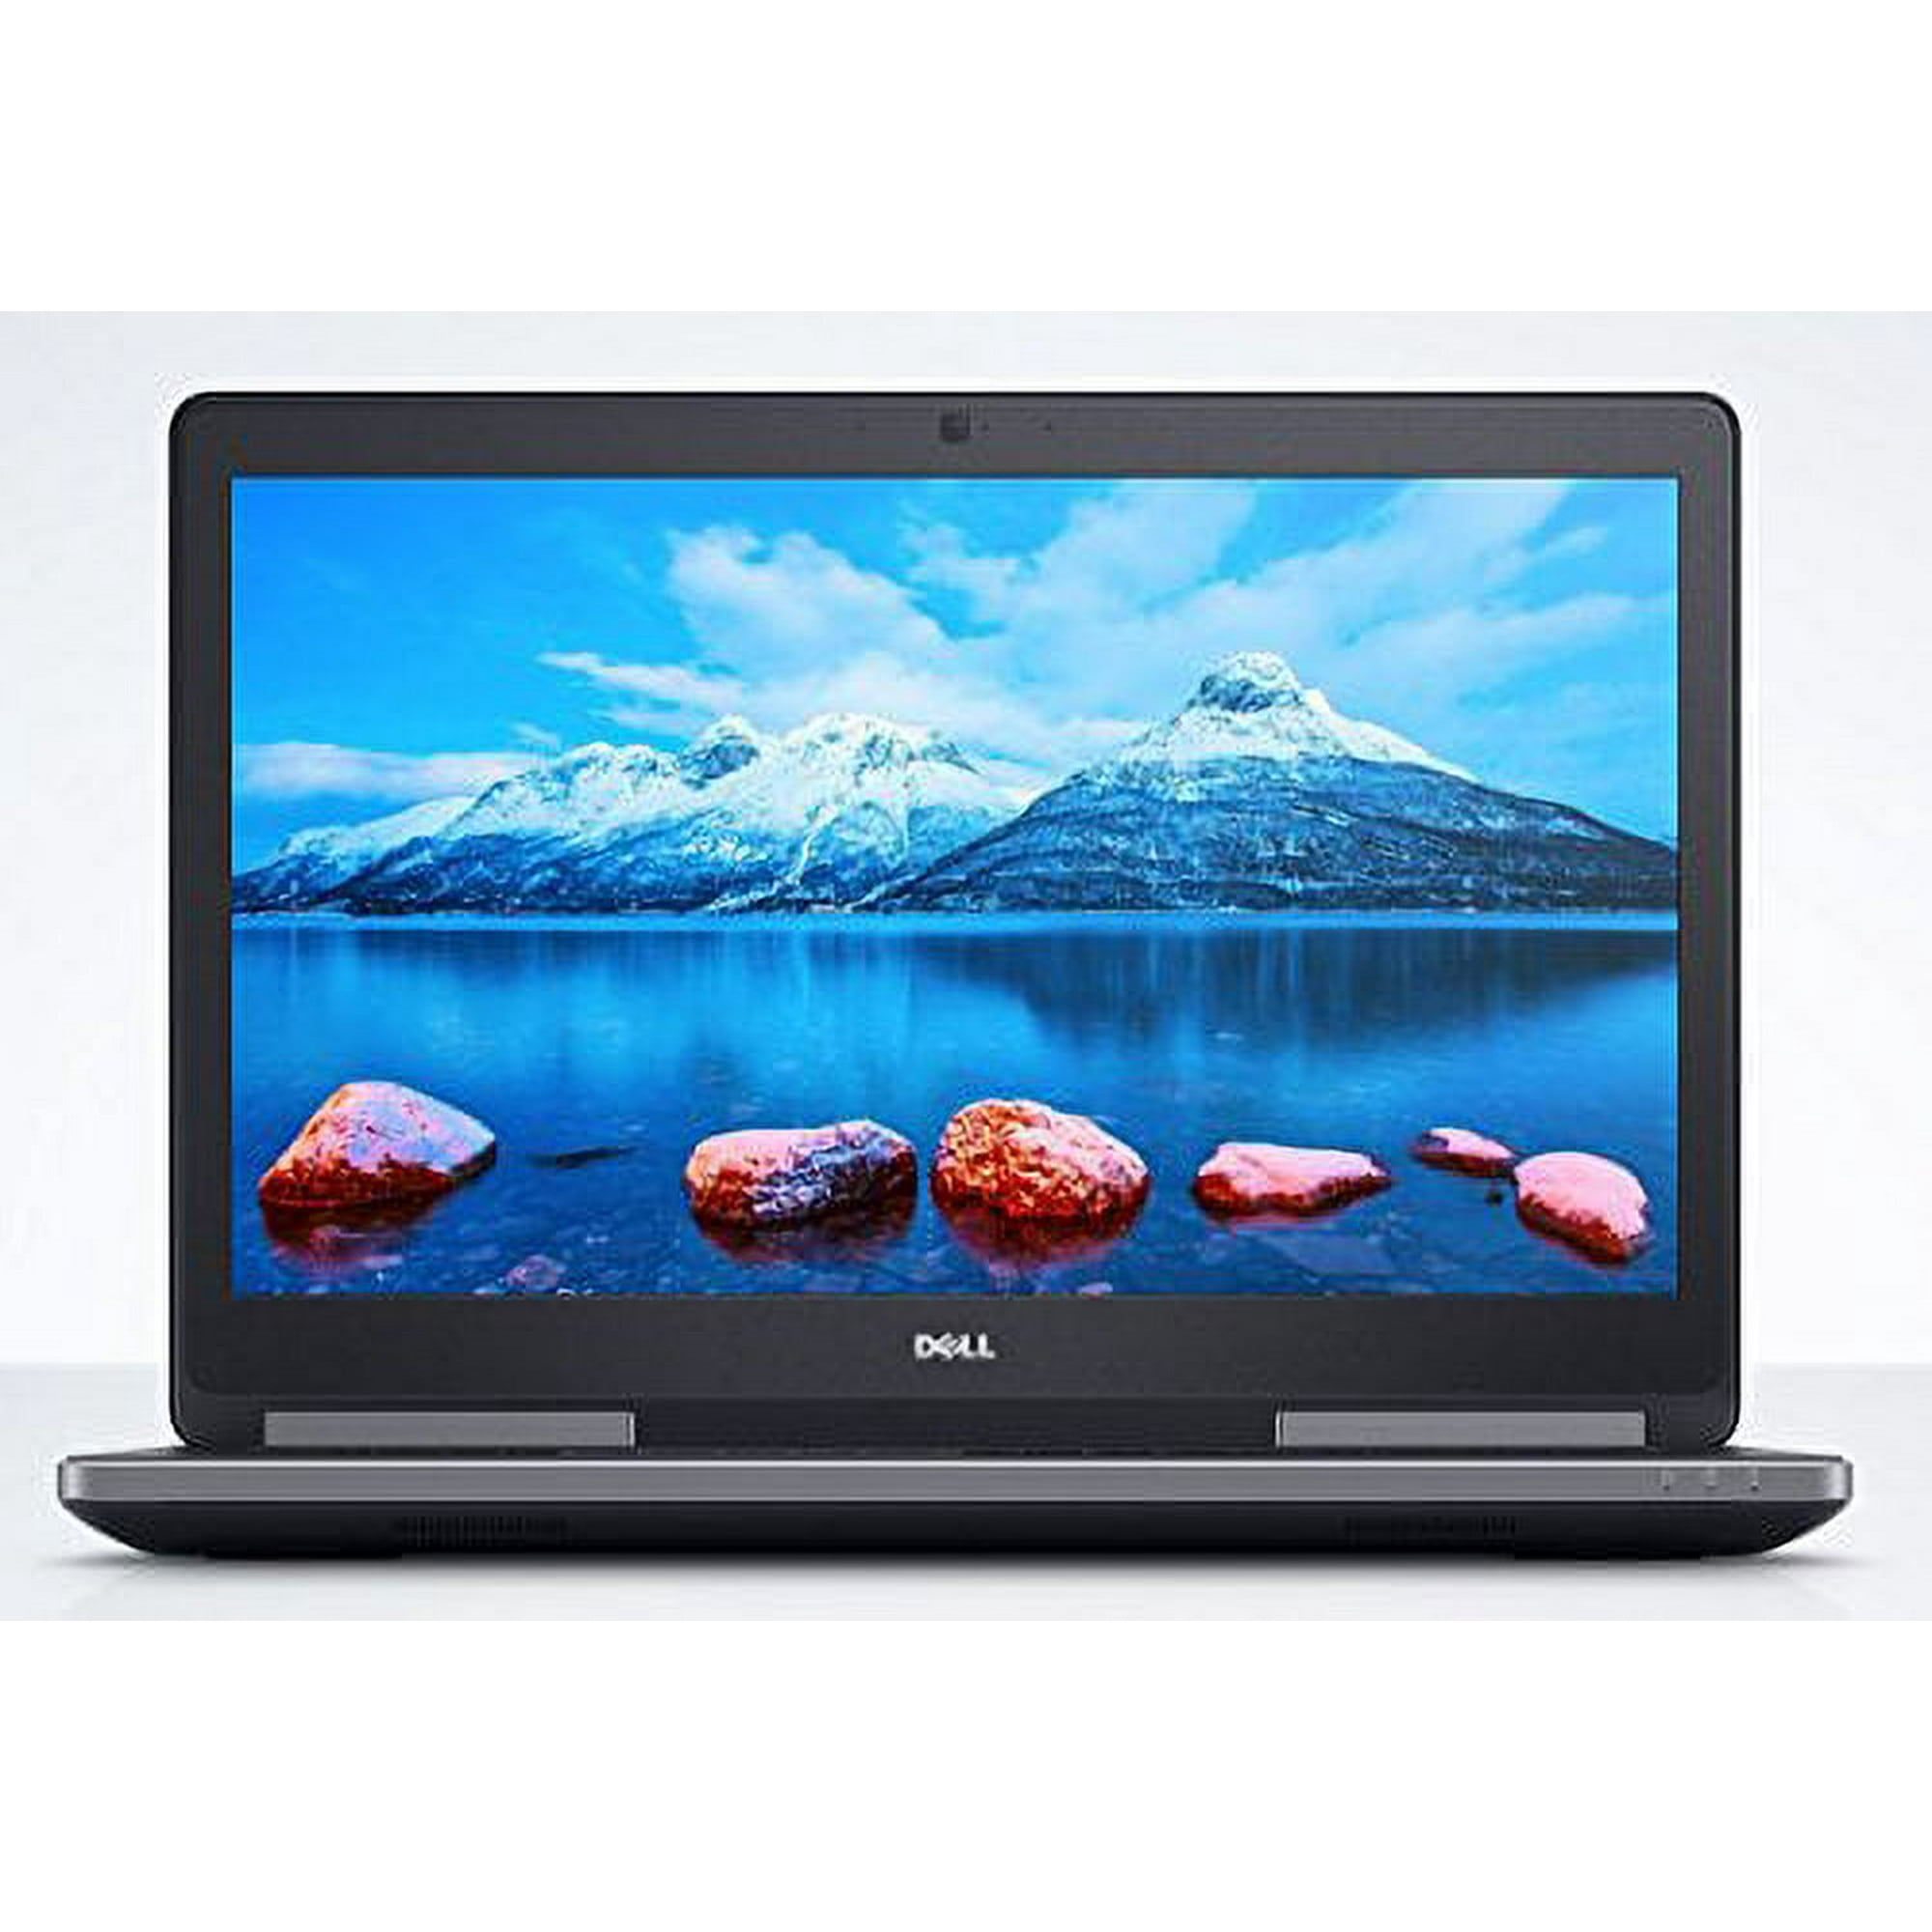 Dell Precision 7710 UHD Business WorkStation PC (Intel Quad Core i7-6820HQ,  64GB Ram, 1TB HDD + 1TB SSD, WIFI, Camera) Nvidia Quadro M3000M, 4GB GDDR5 